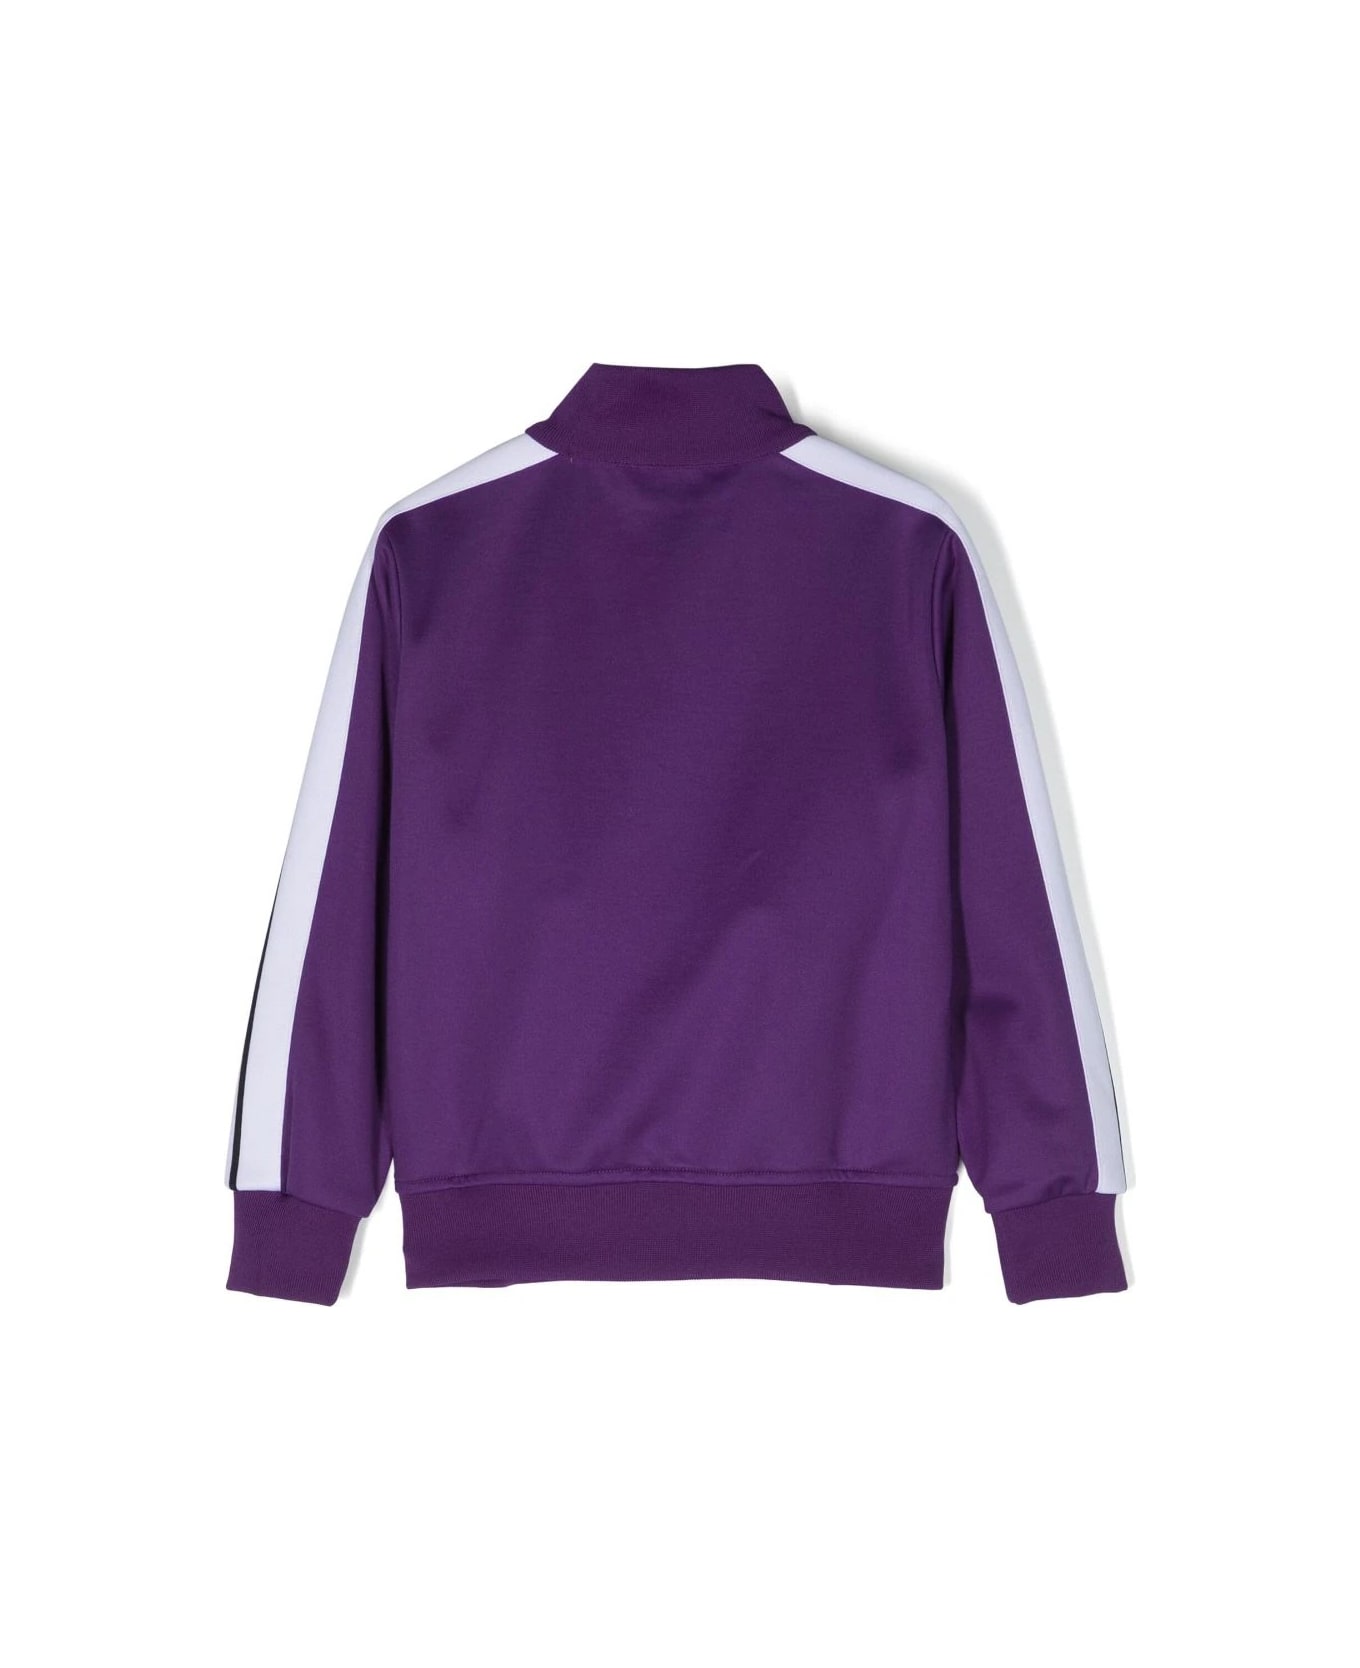 Palm Angels Purple Track Jacket With Zip And Logo - Purple ニットウェア＆スウェットシャツ